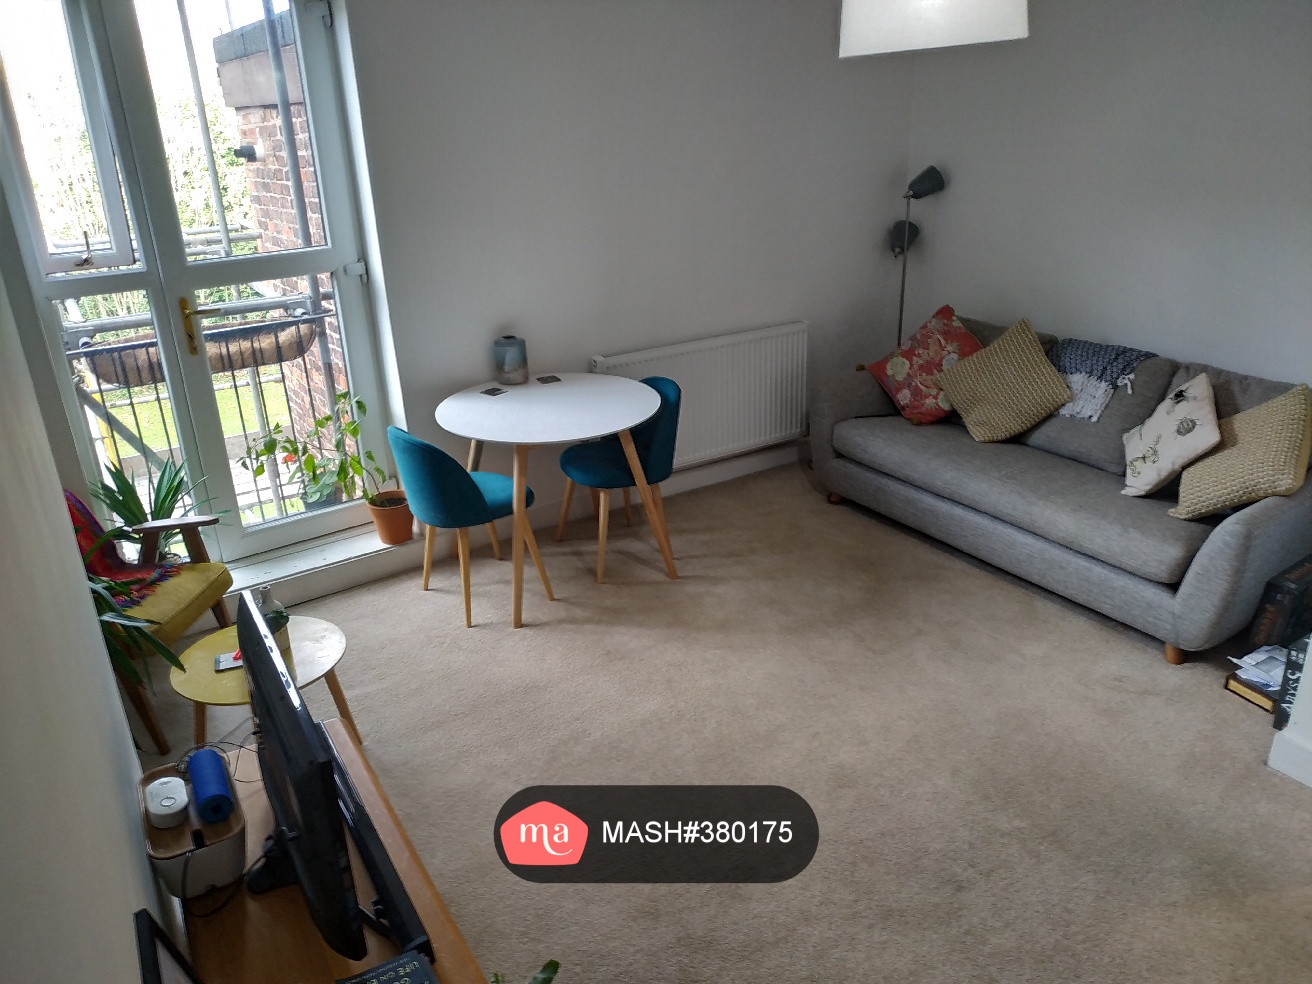 2 Bedroom Flat to rent in Manchester - Mashroom